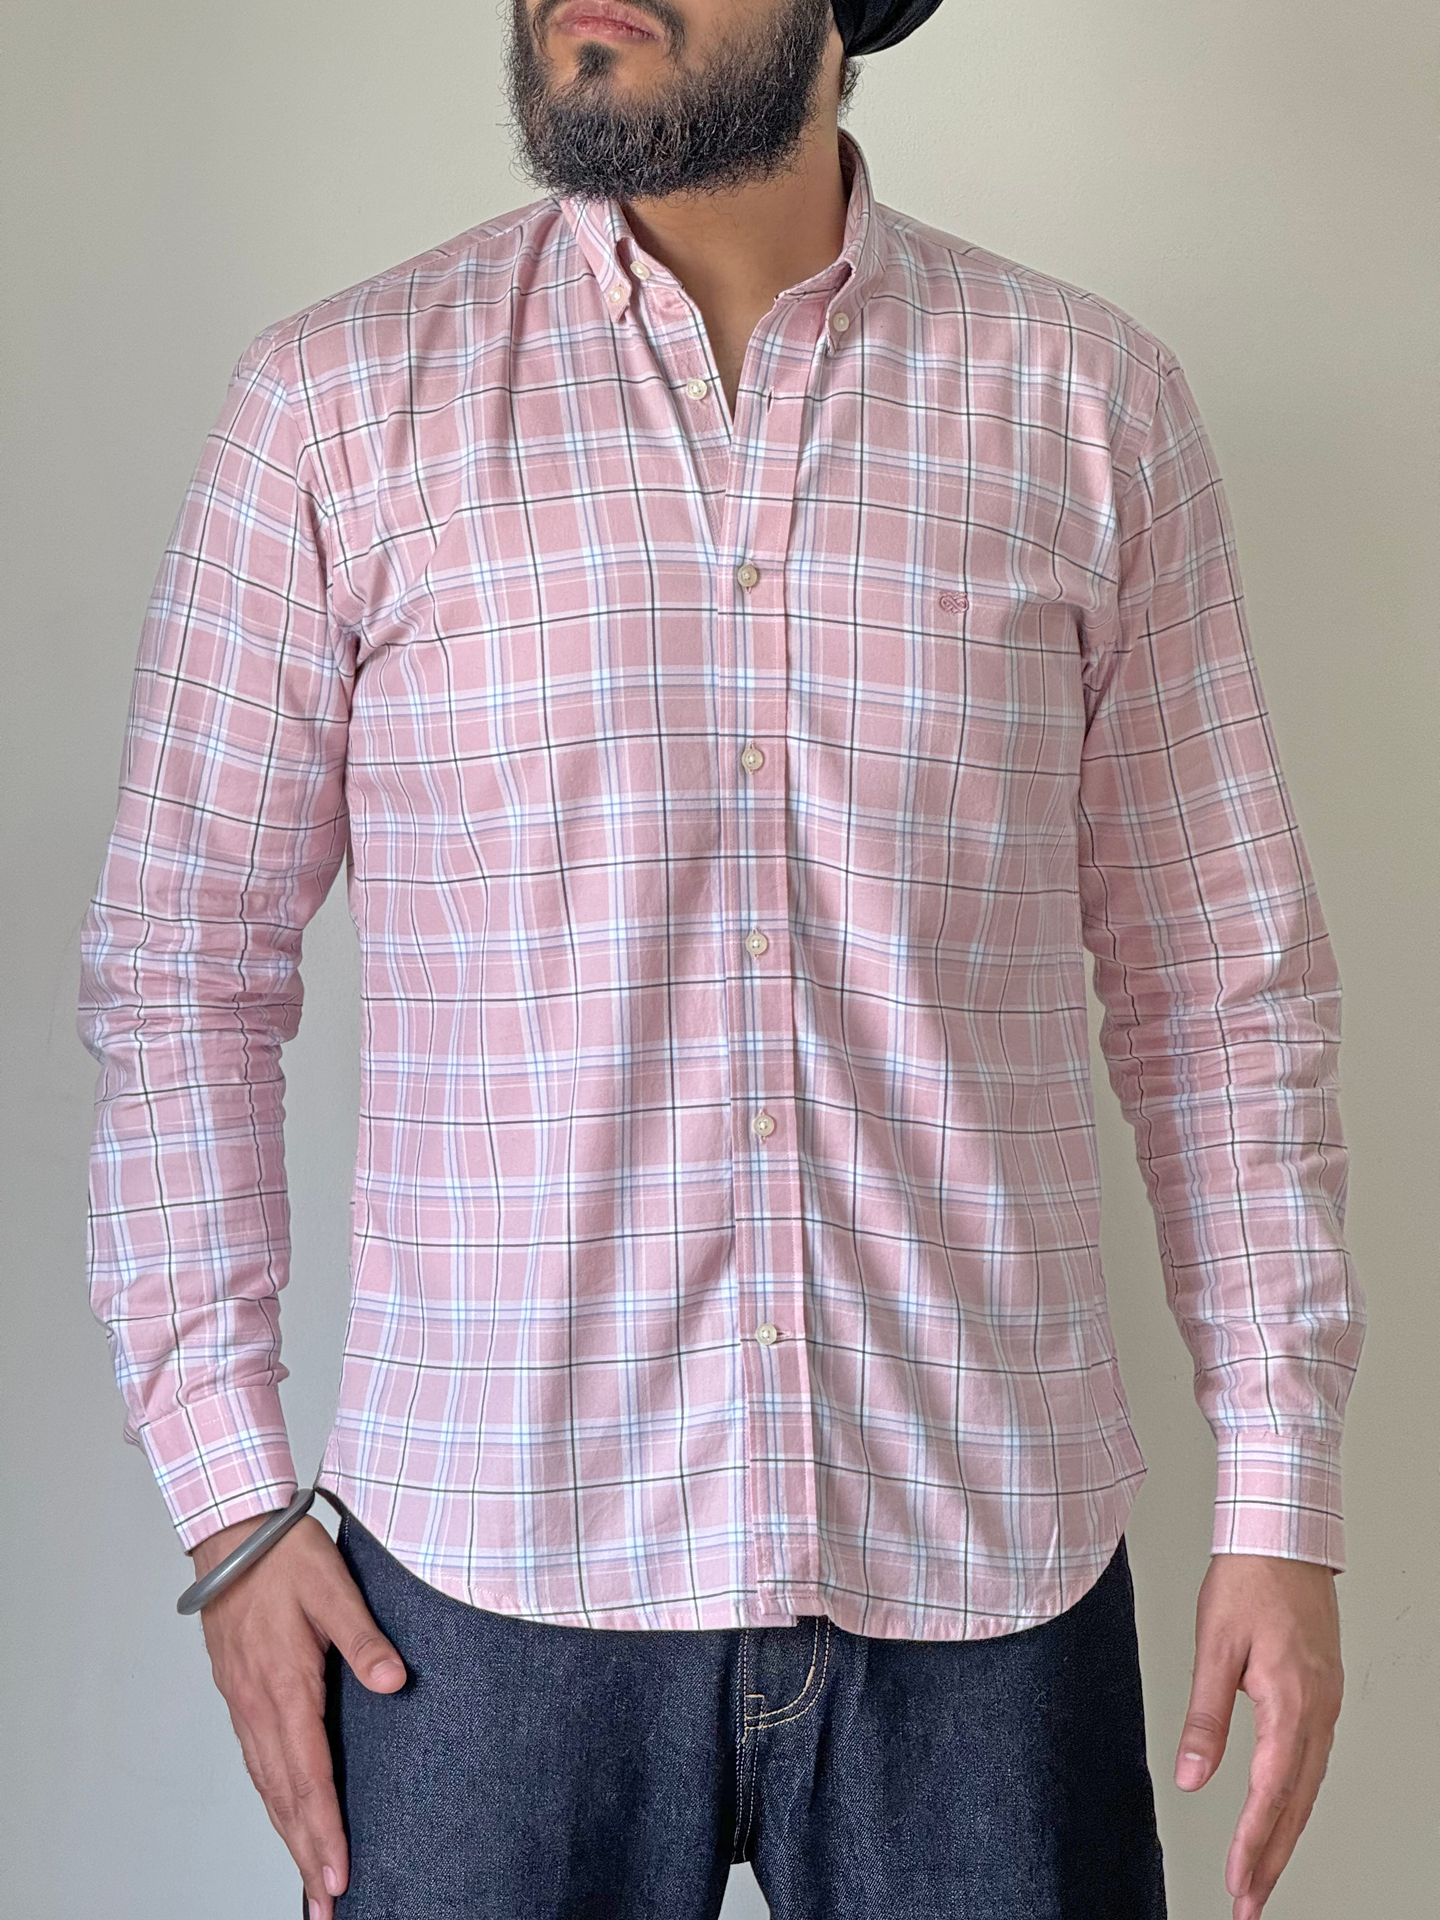 Retro Crepe Pink Grid Shirt